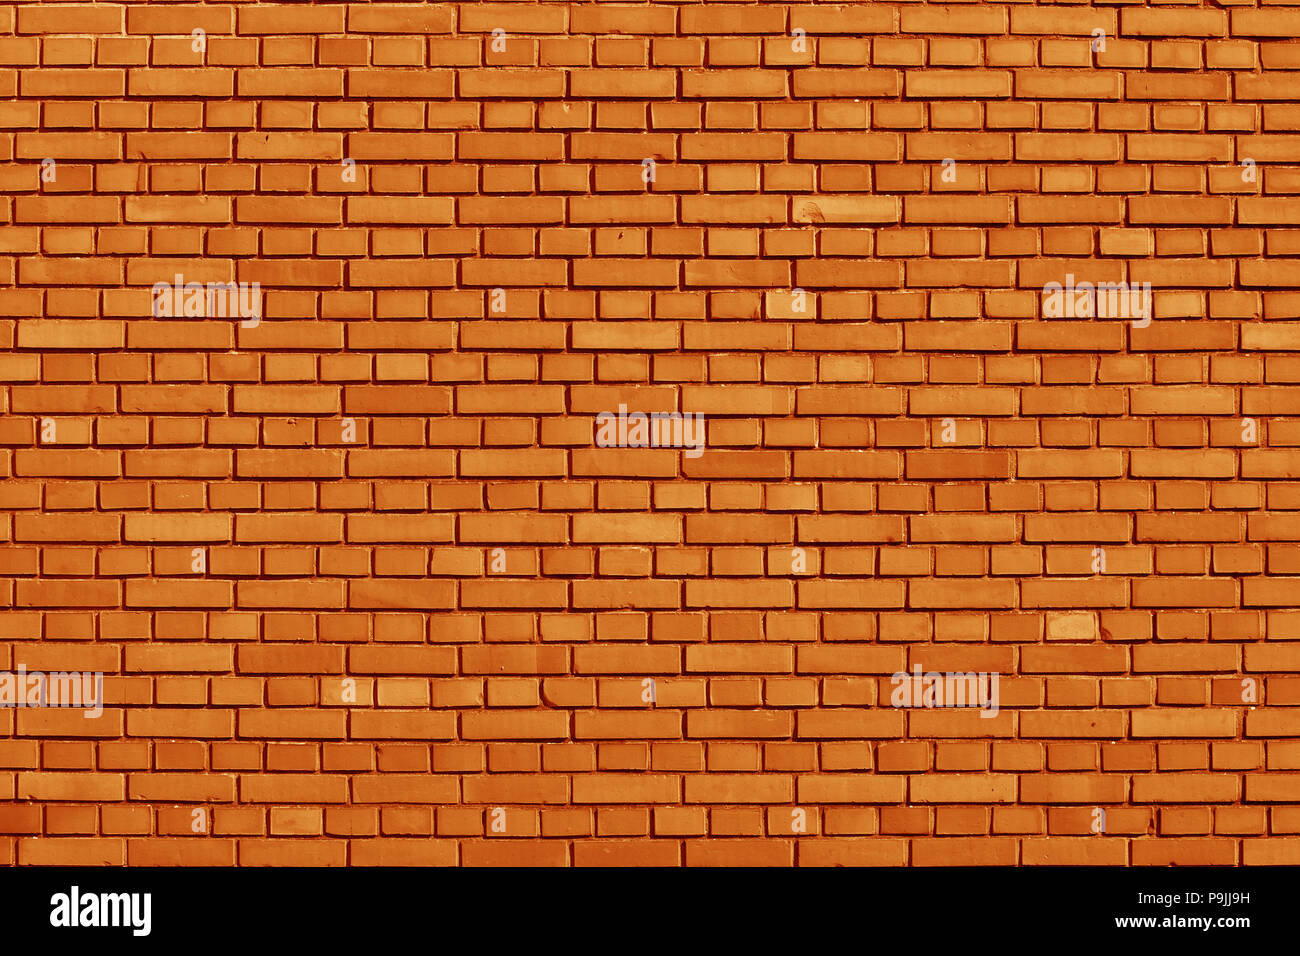 Russet Orange colored brick wall background Stock Photo